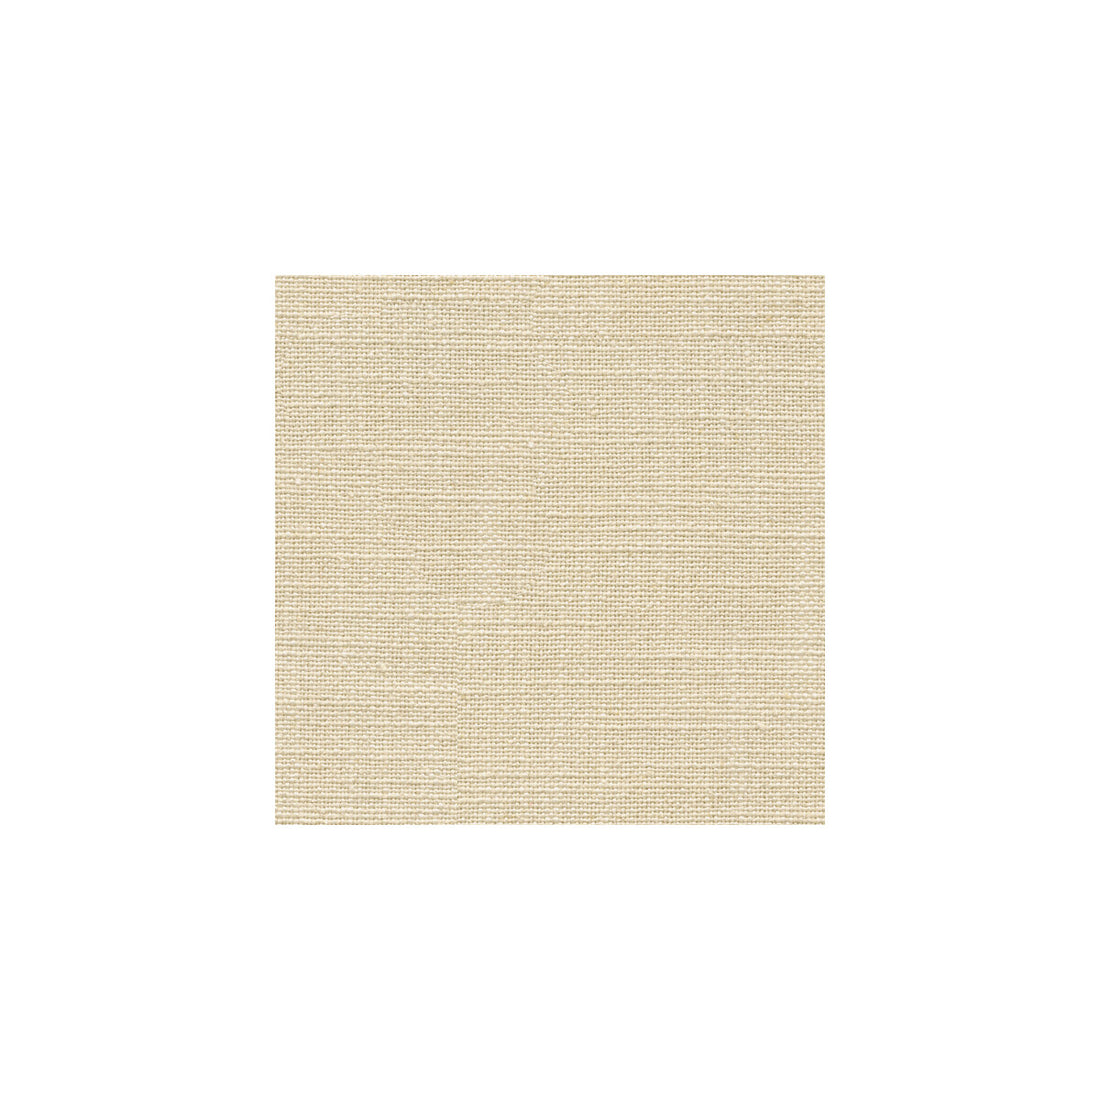 Magnifique fabric in cream color - pattern 31507.111.0 - by Kravet Smart